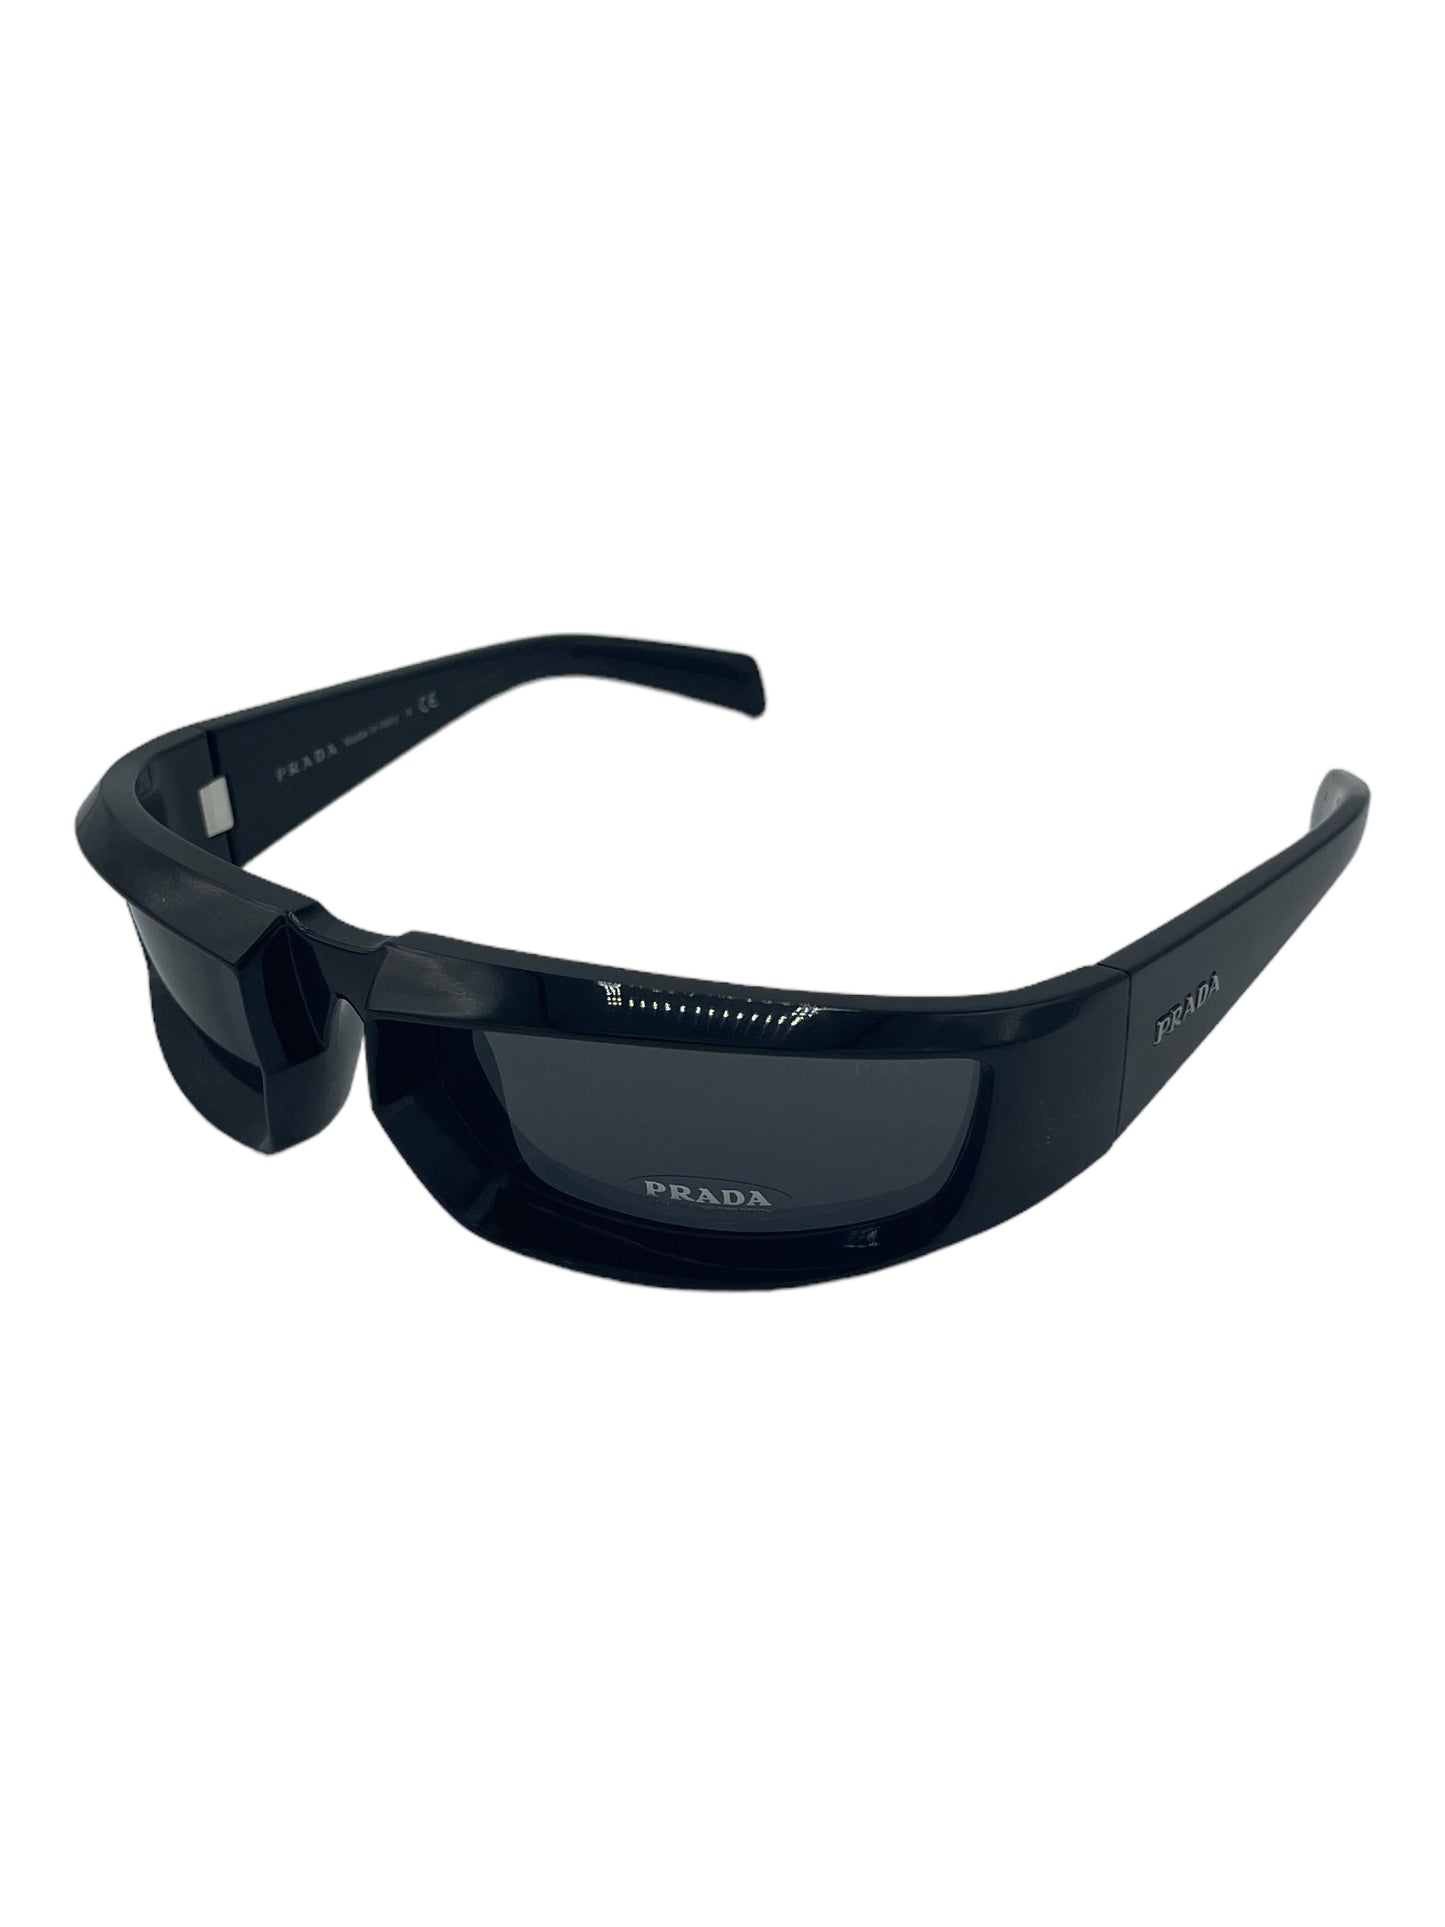 Prada Black Turbo Sunglasses